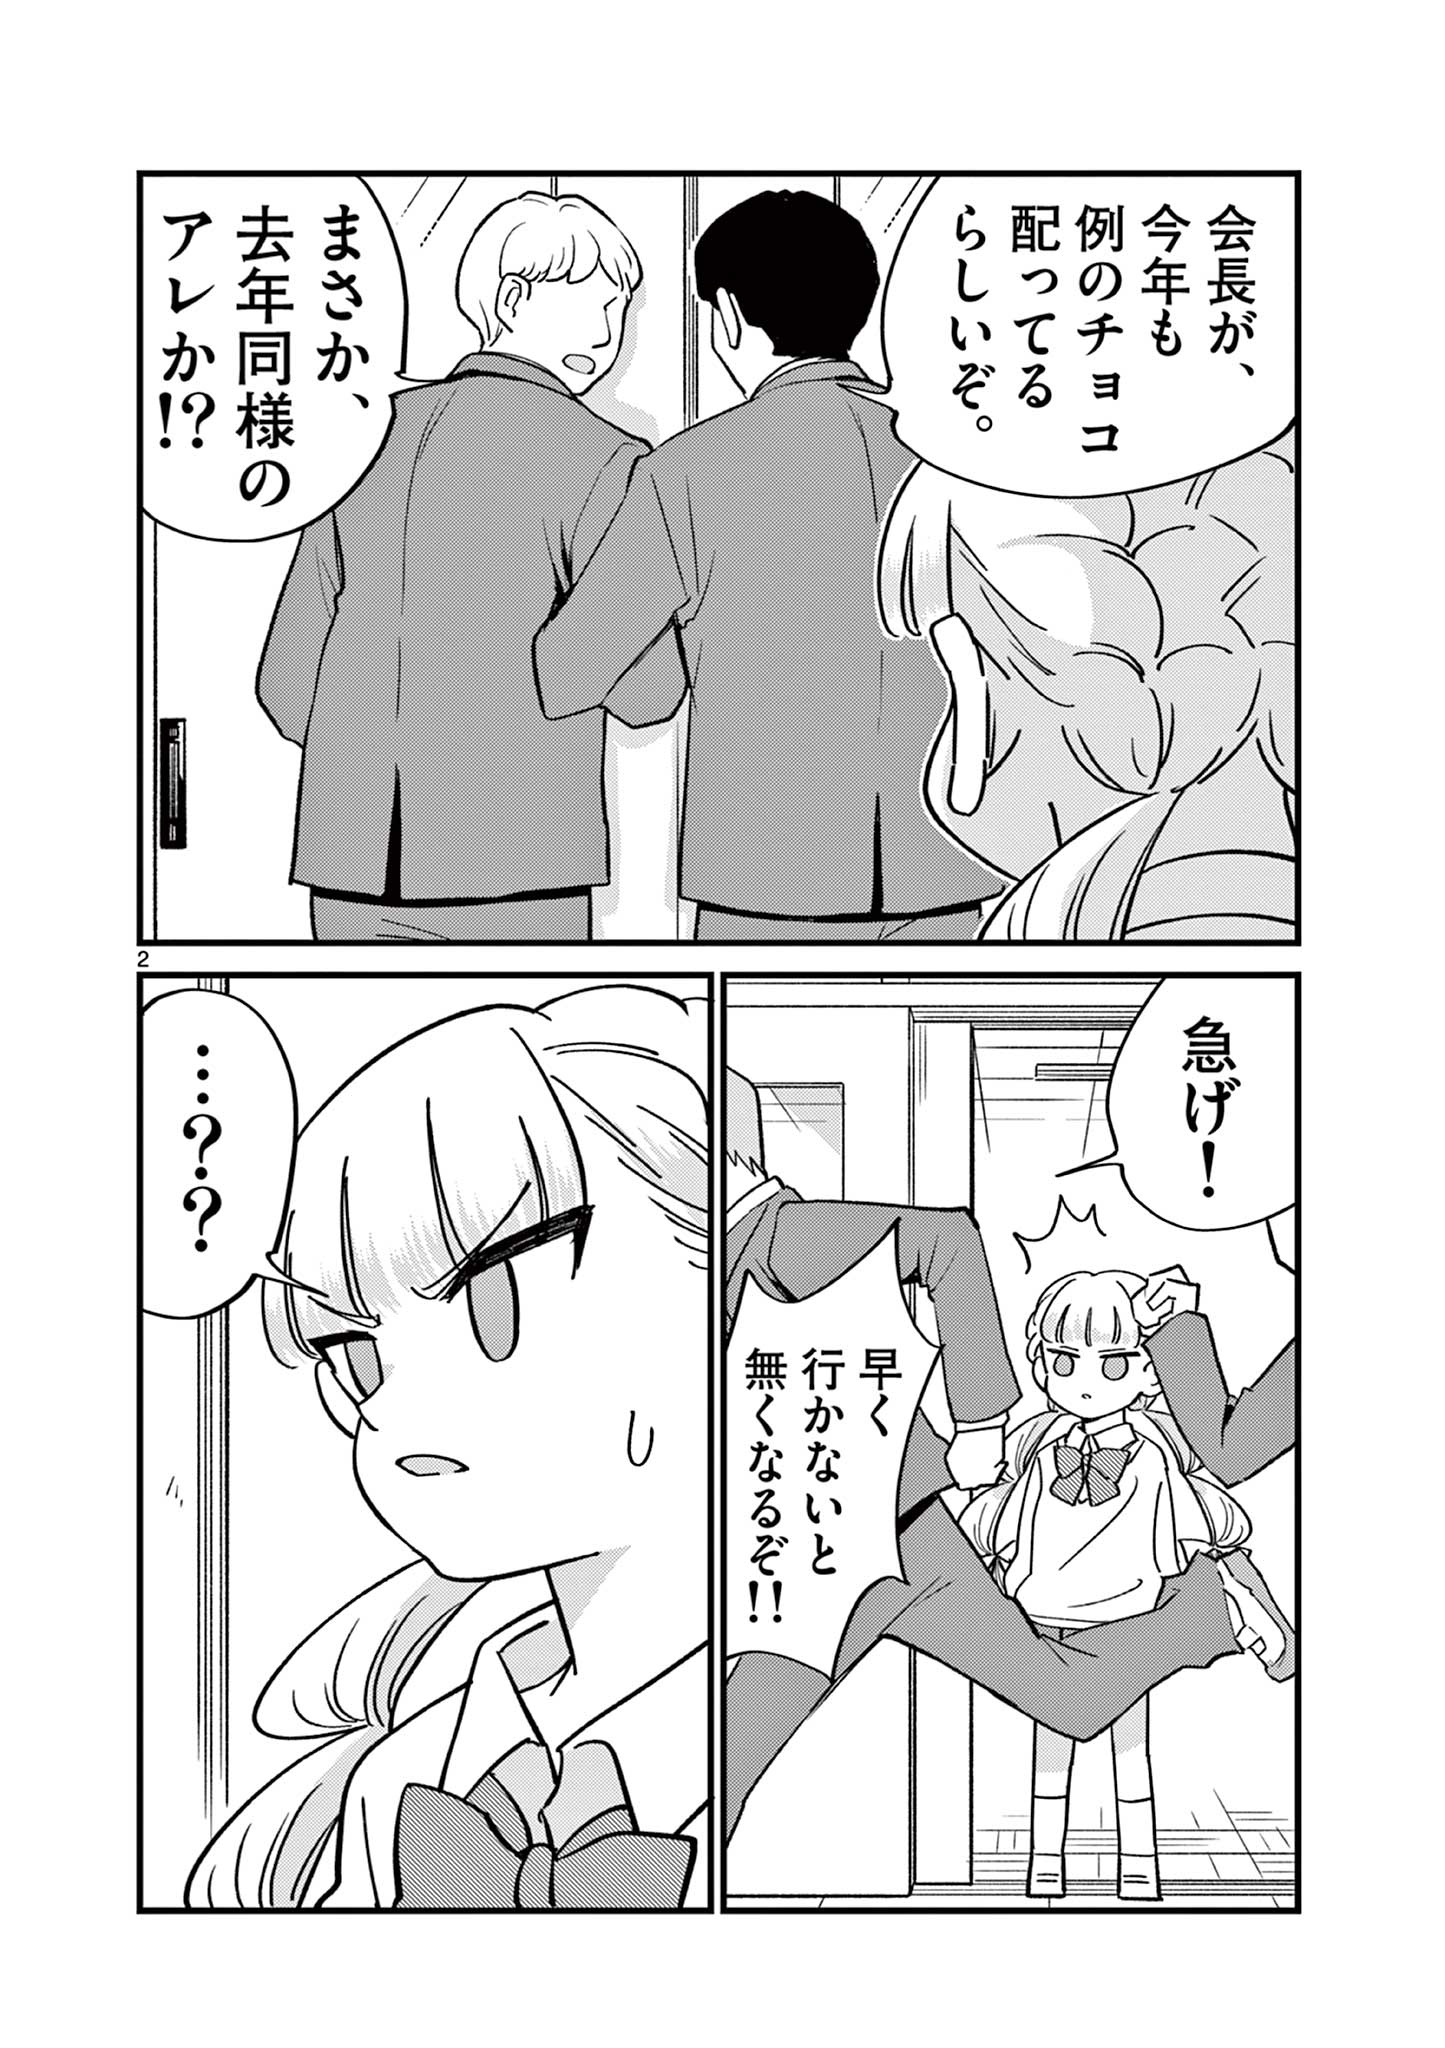 Ranka-chan wa Bitch ni Naritai - Chapter 21 - Page 2